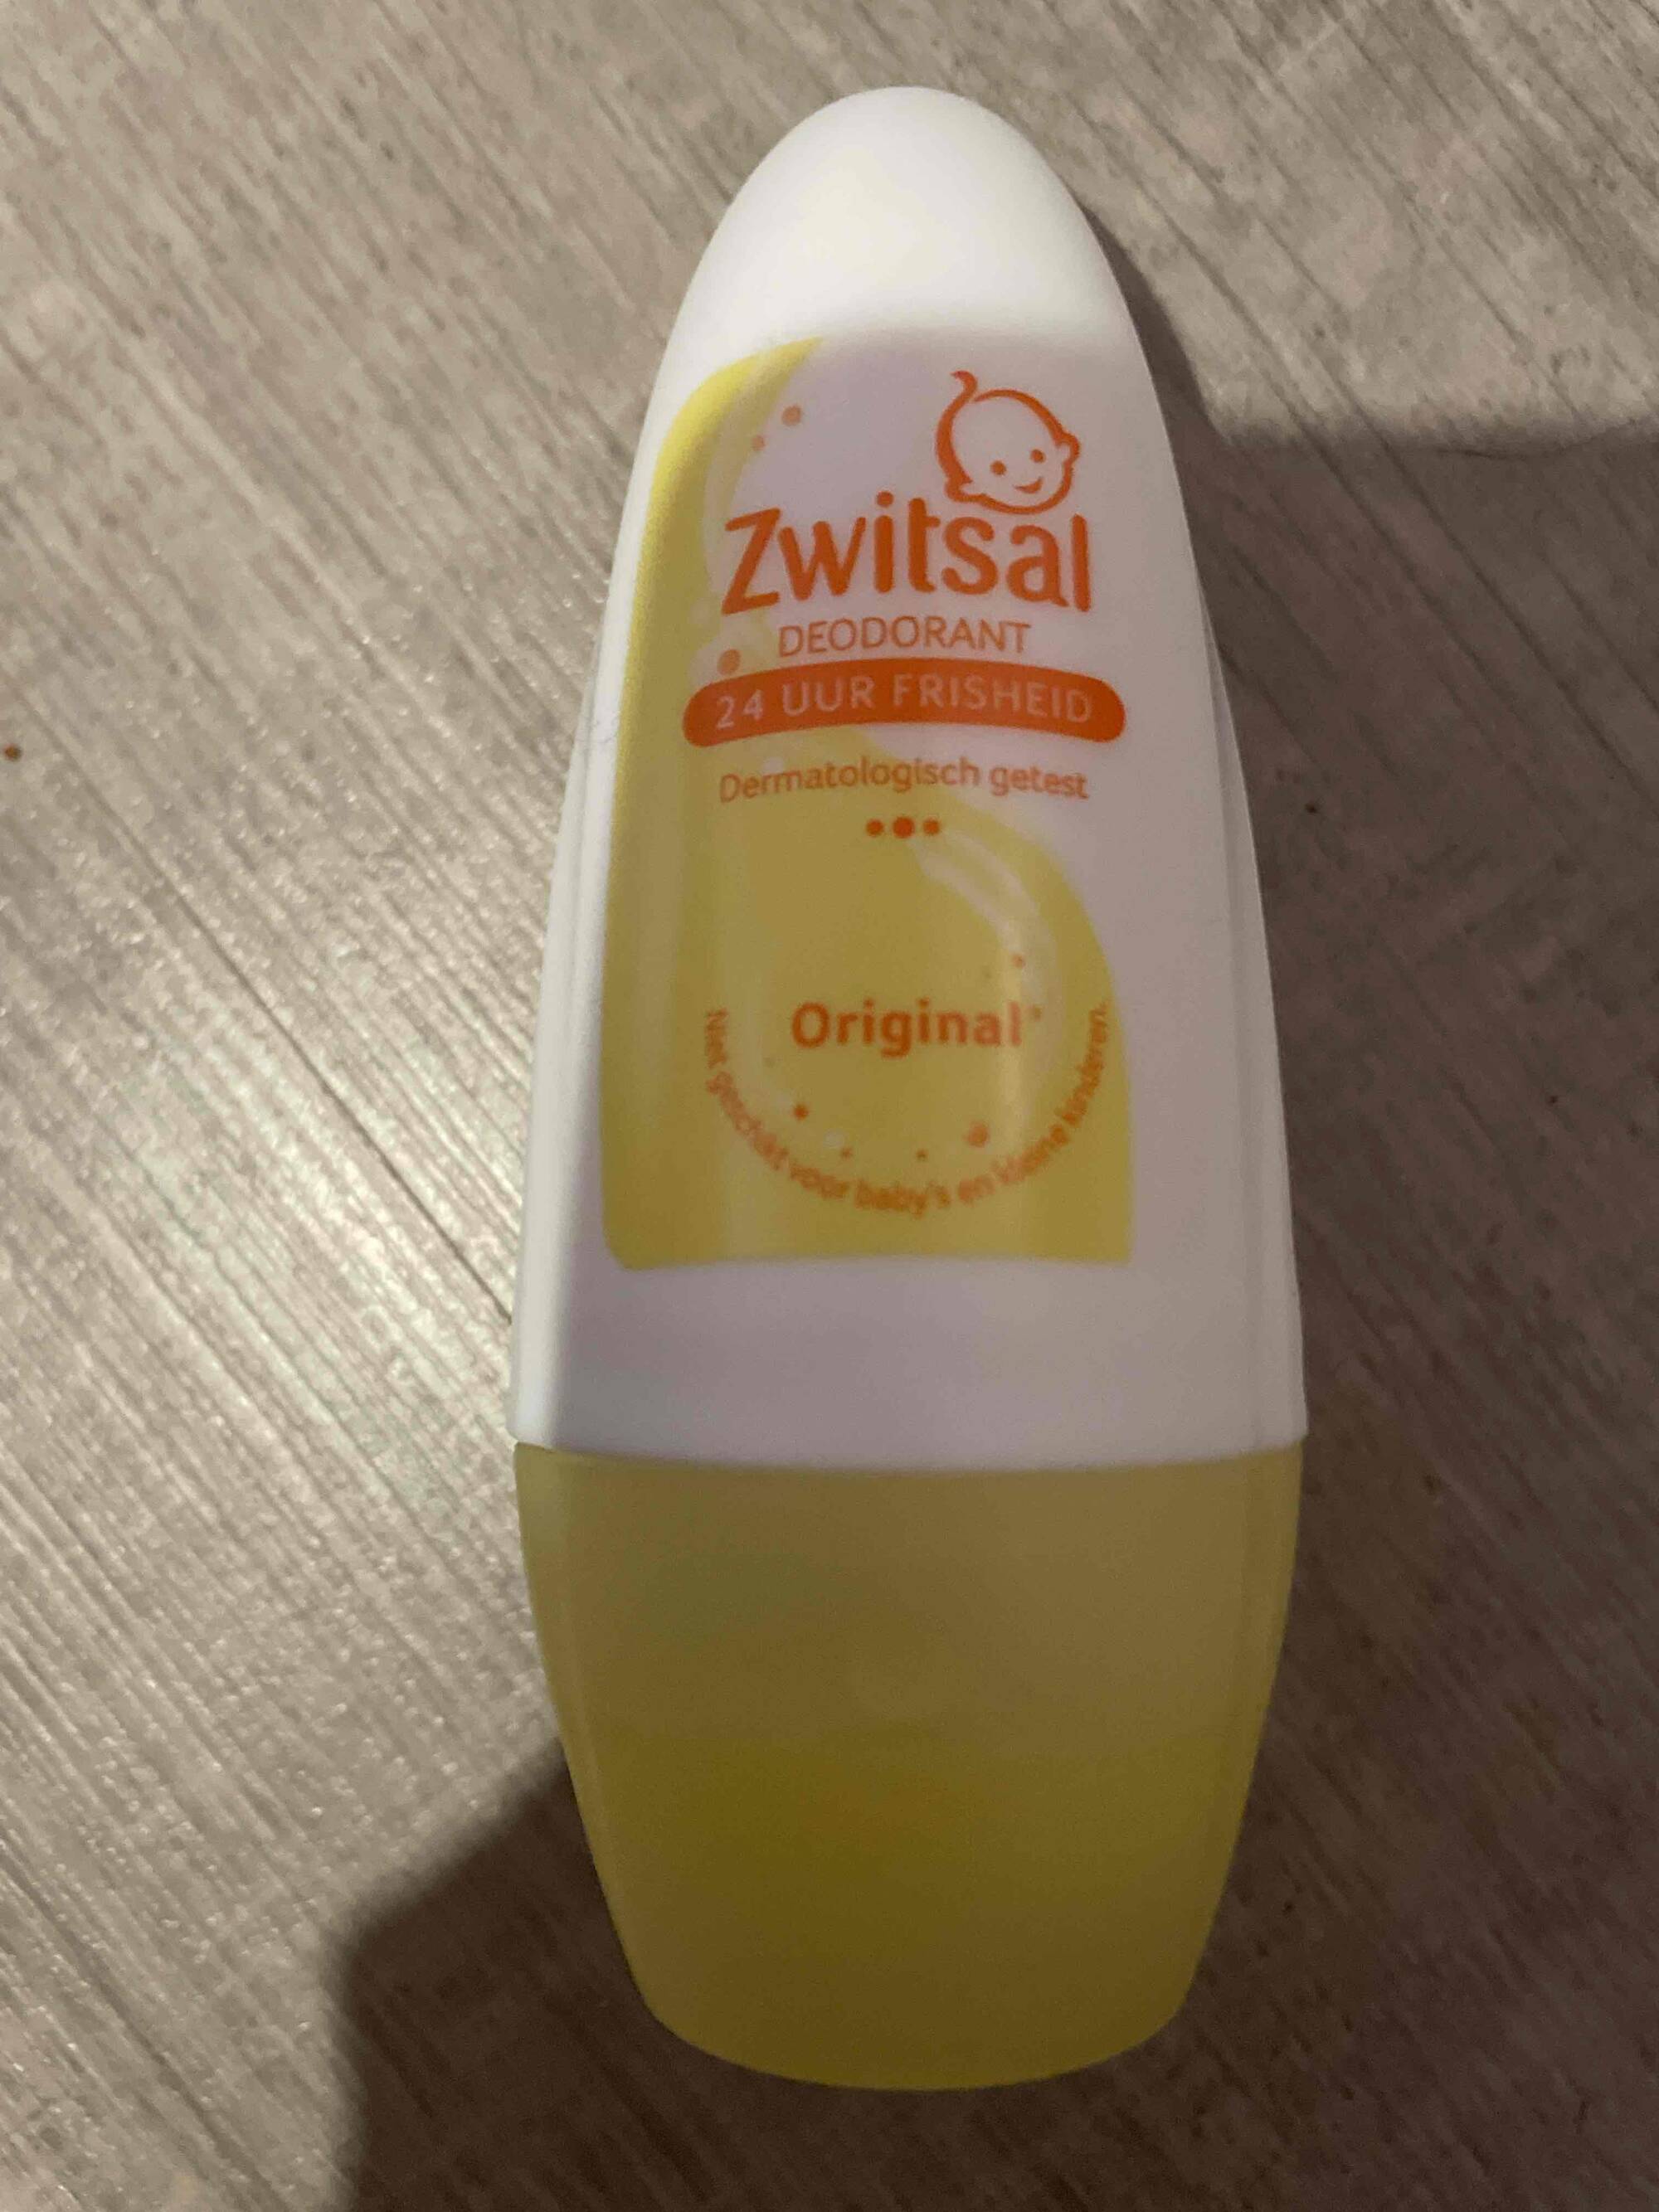 ZWITSAL - Original - Deodorant  24 uur frisheid